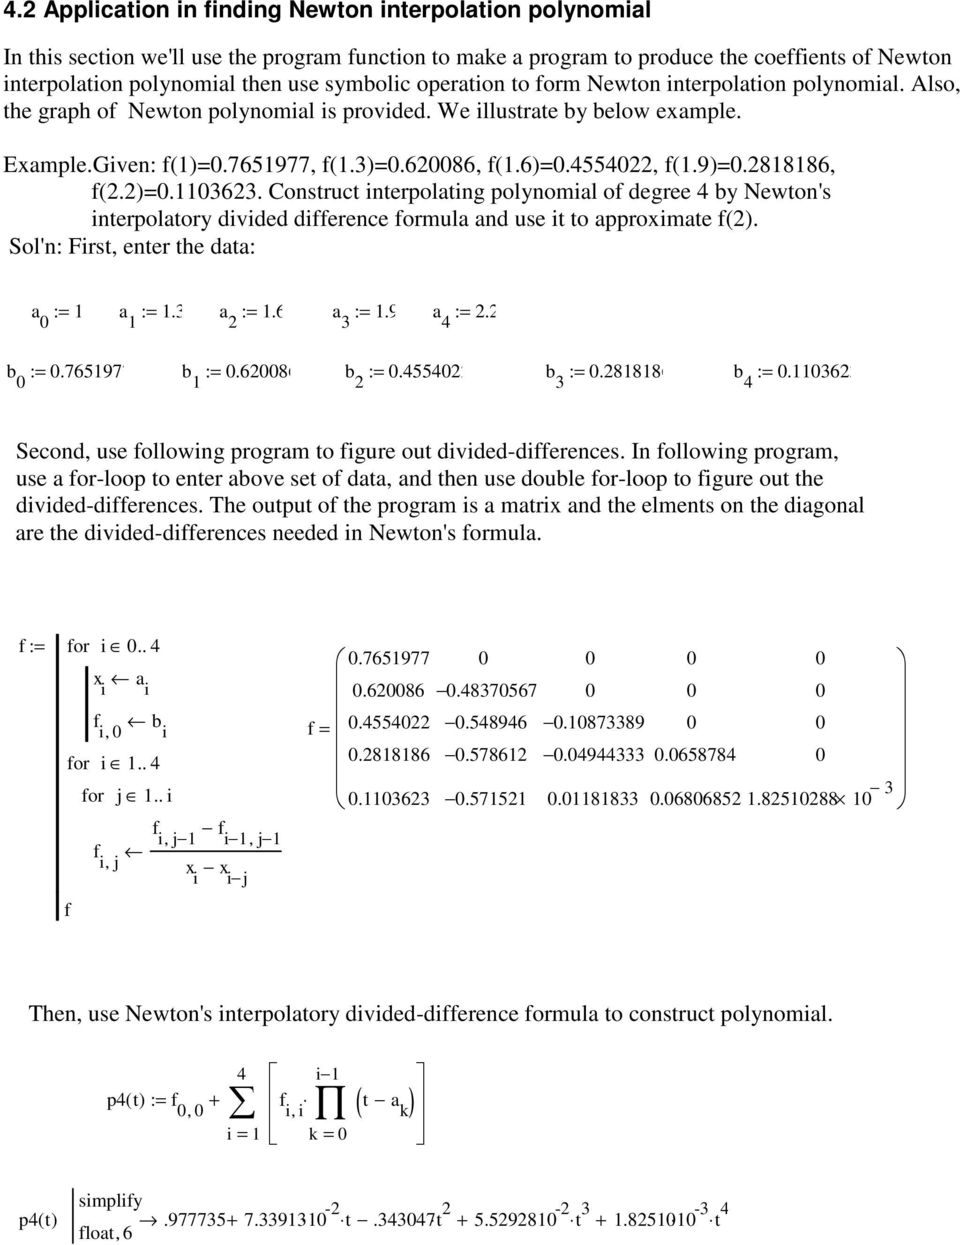 Construct nterpolatng polynomal of degree by Newton